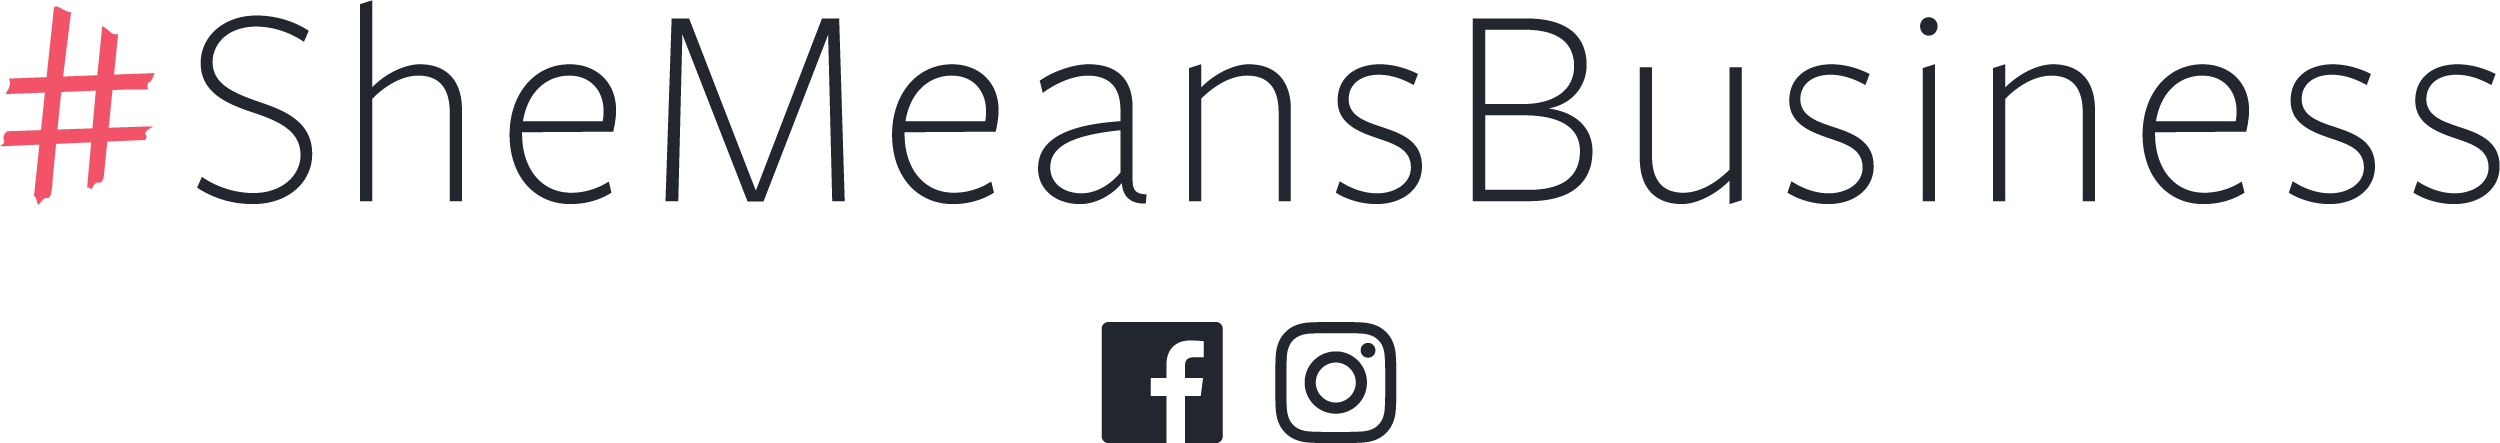 FB-SheMeansBusiness-Logo-w-icons-RGB-Grey